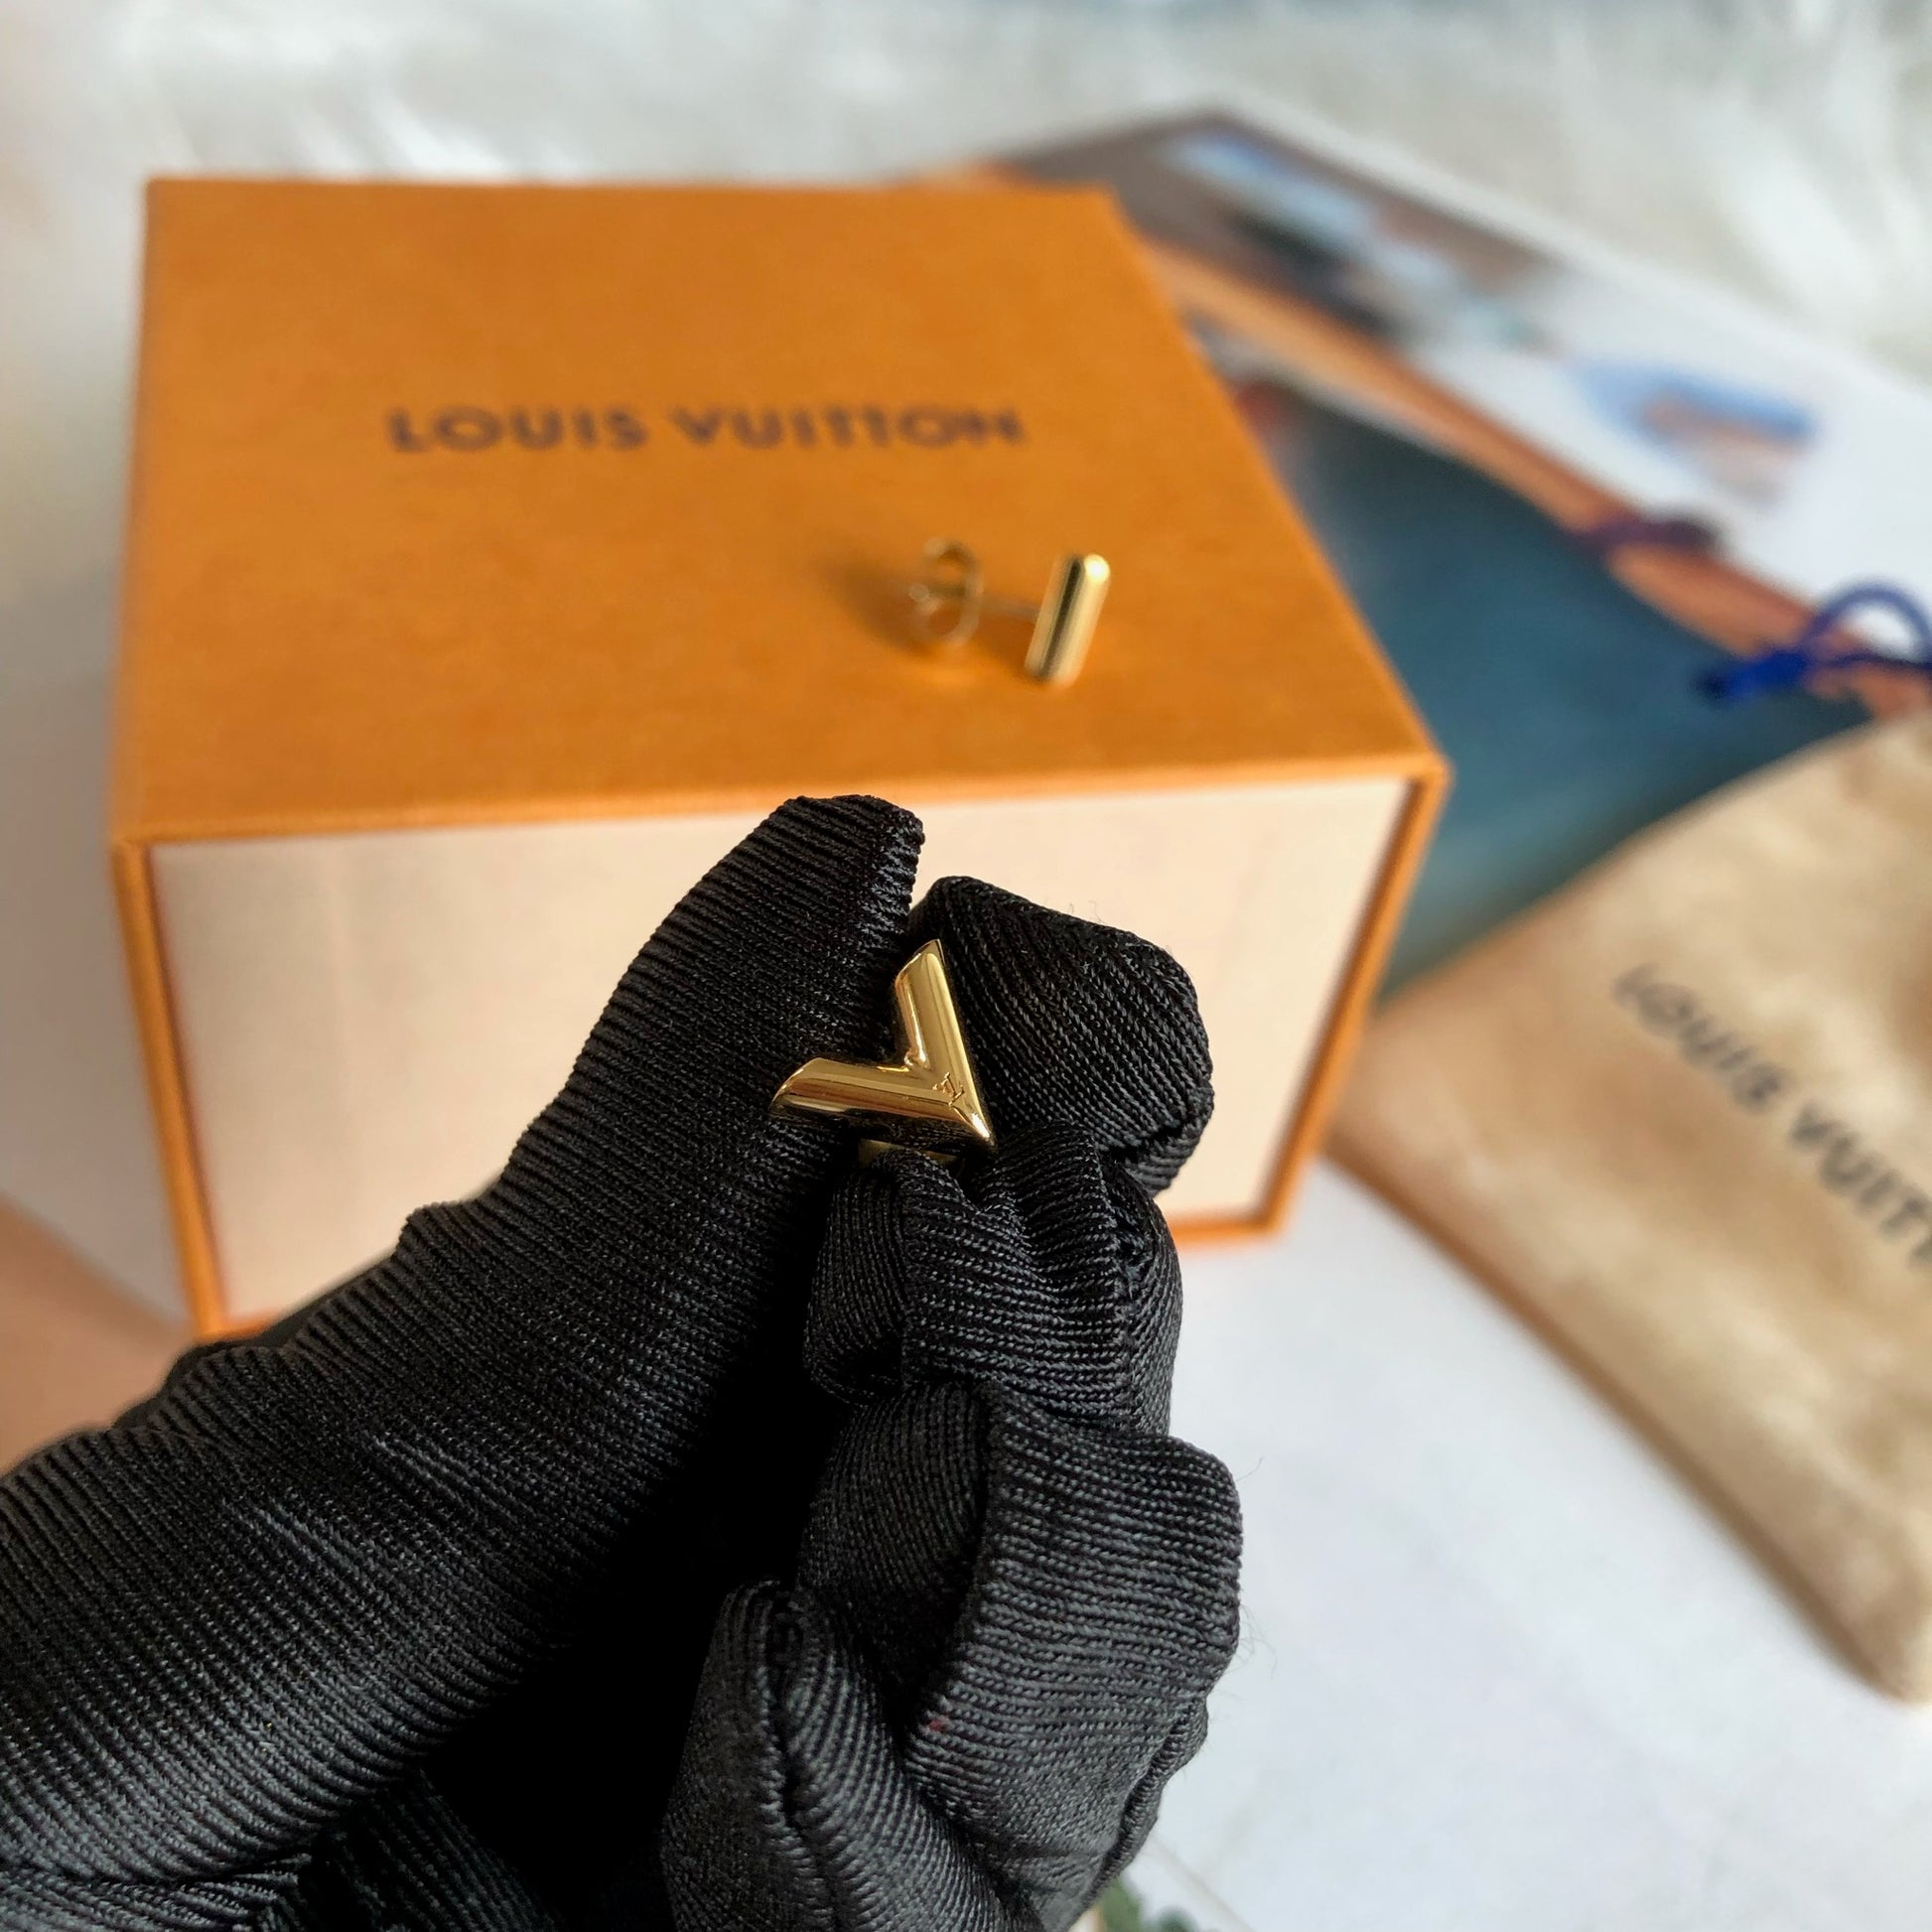 Vintage Authentic Louis Vuitton Gold Metal Essential V Earrings France W/  Box